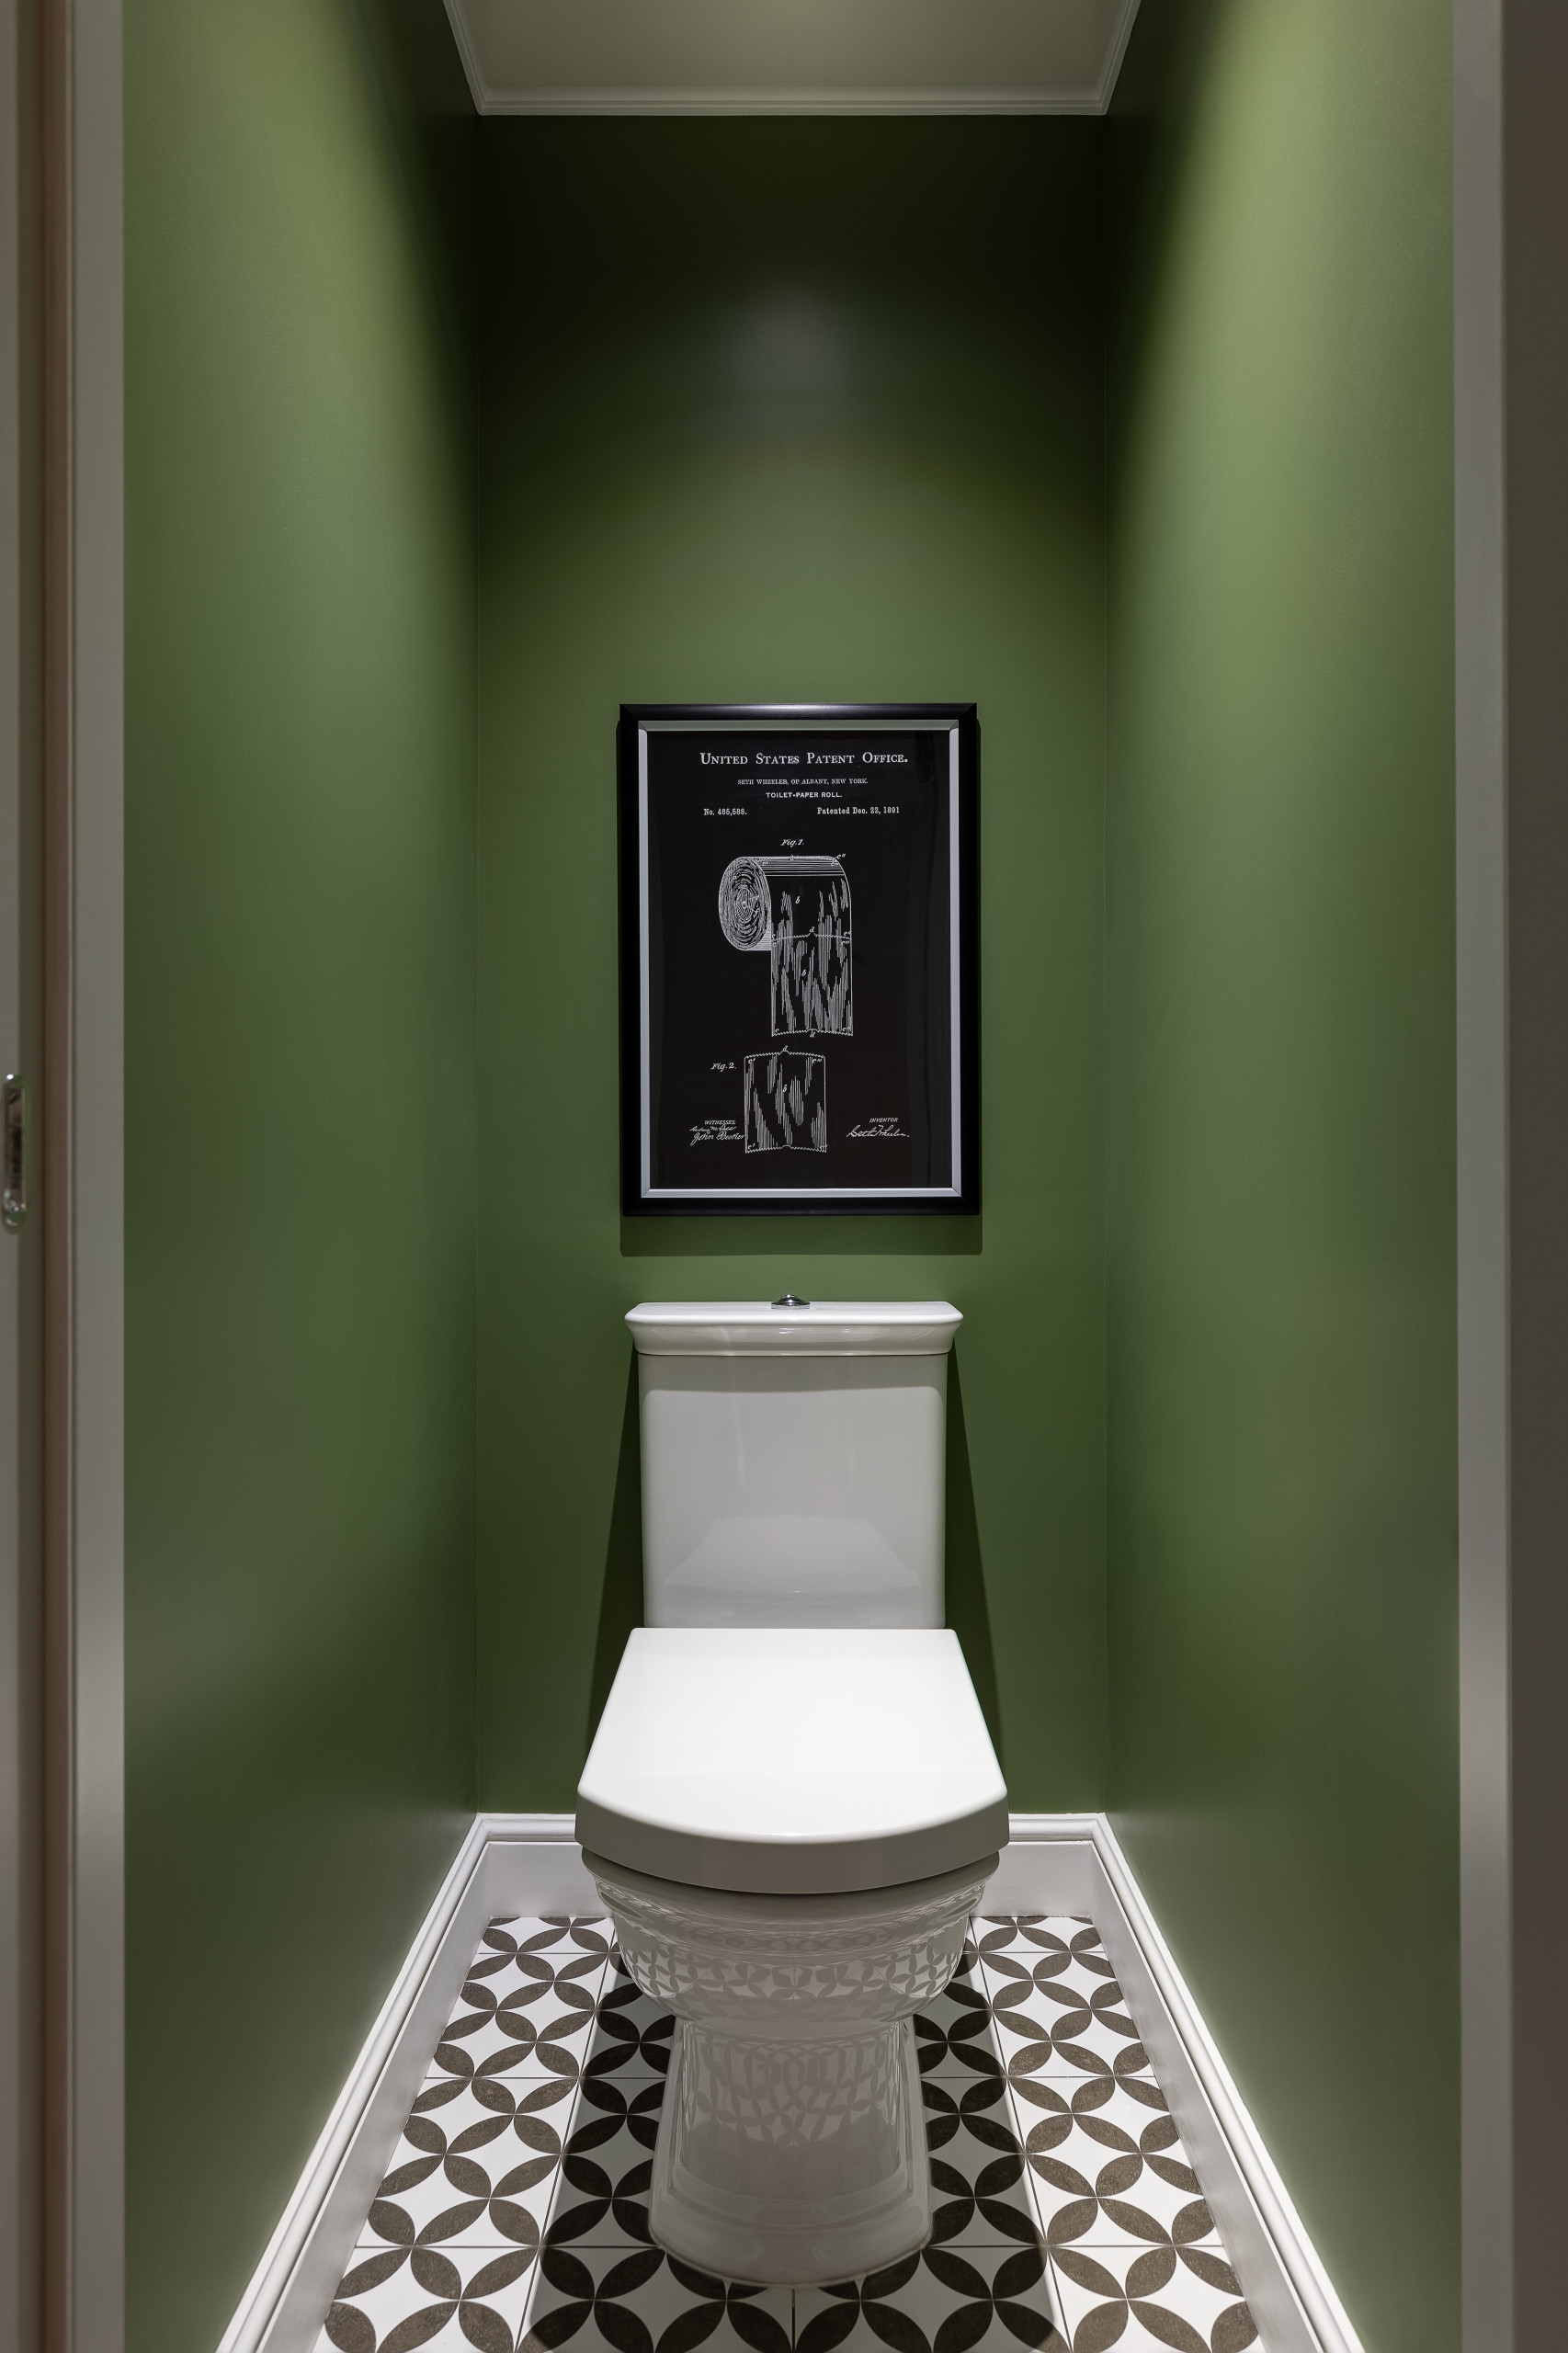 Зеленый туалет дизайн